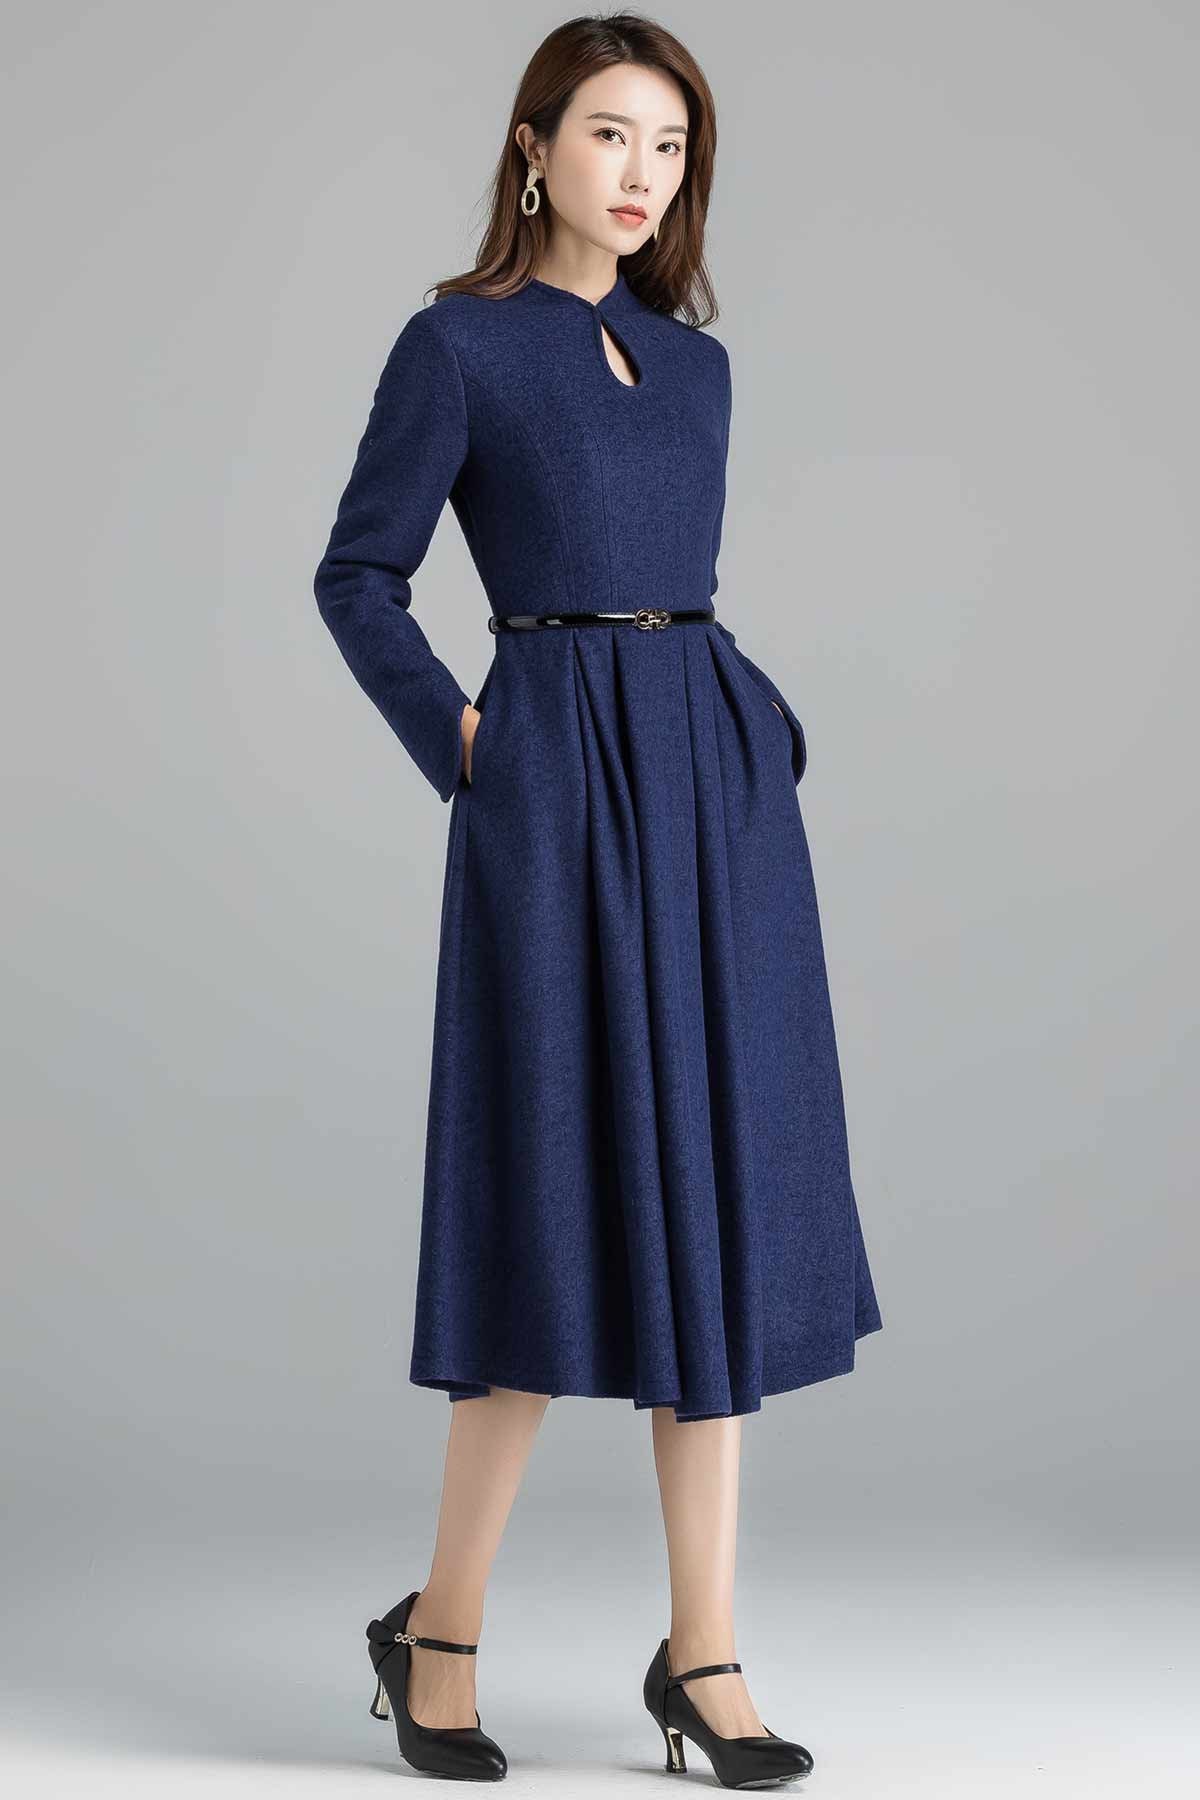 Modest wool dress Vintage inspired wool dress Wool dress | Etsy